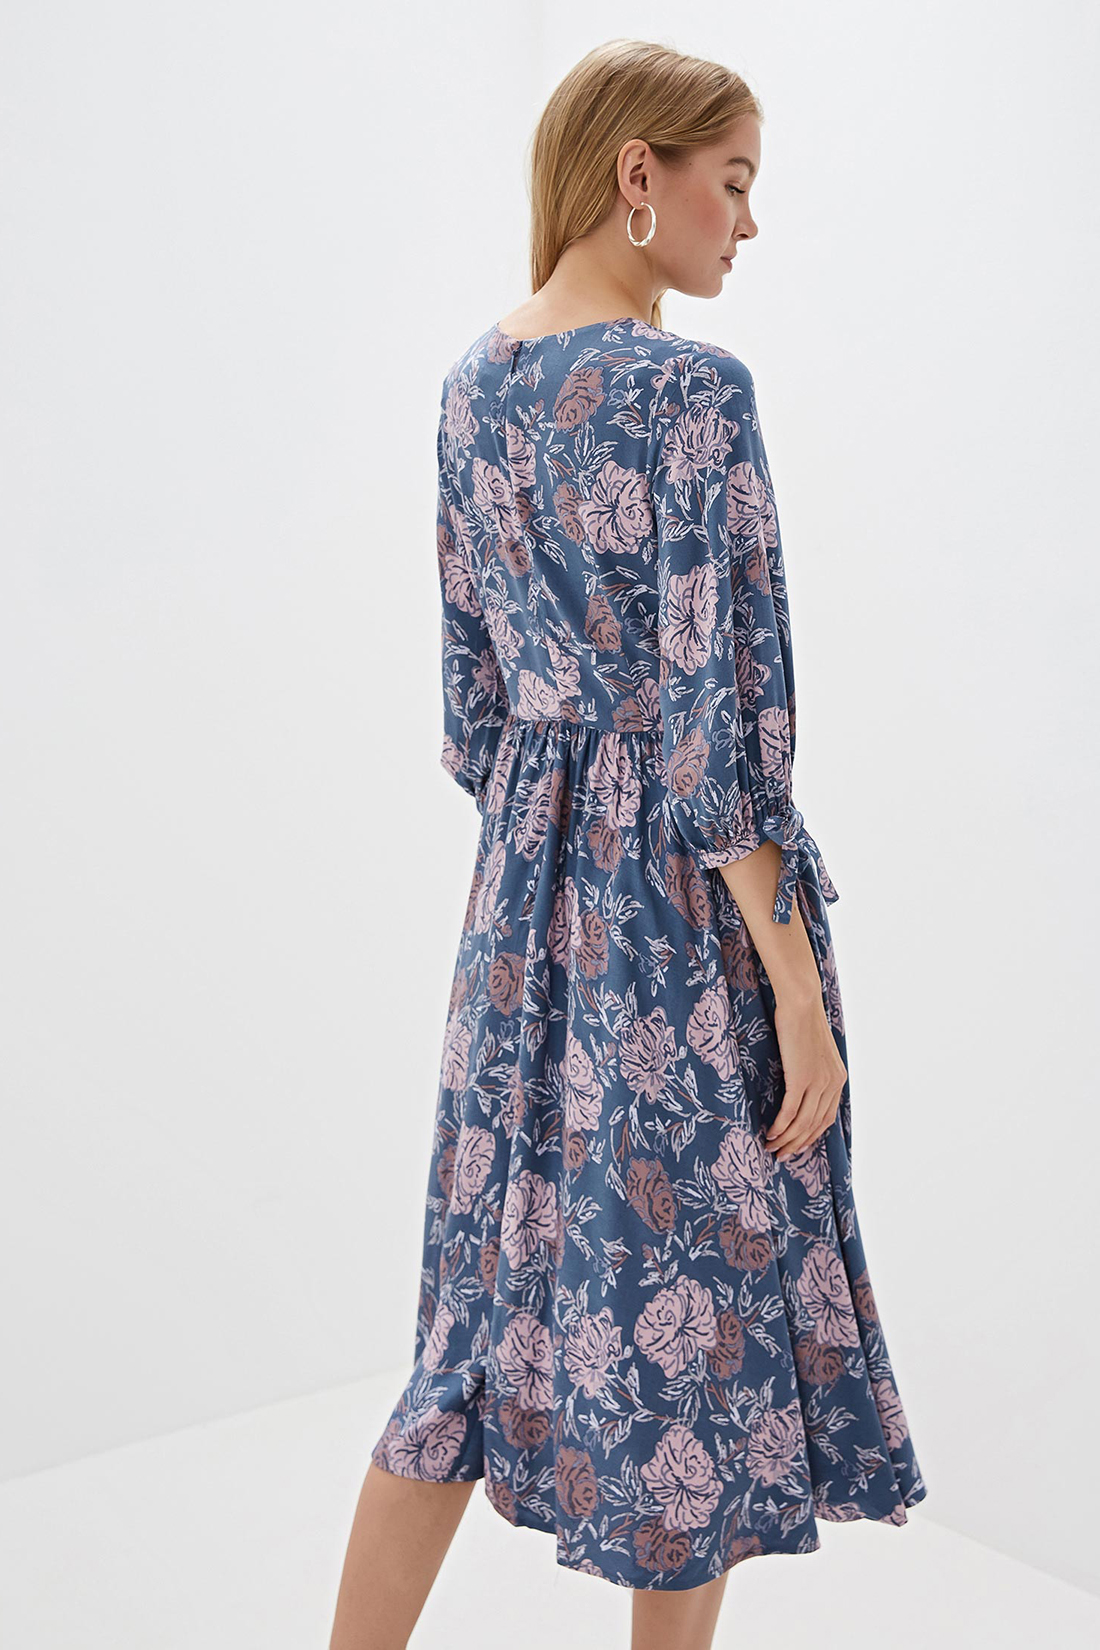 Платье с узором из роз (арт. baon B459509), размер S, цвет night shark printed#синий Платье с узором из роз (арт. baon B459509) - фото 2